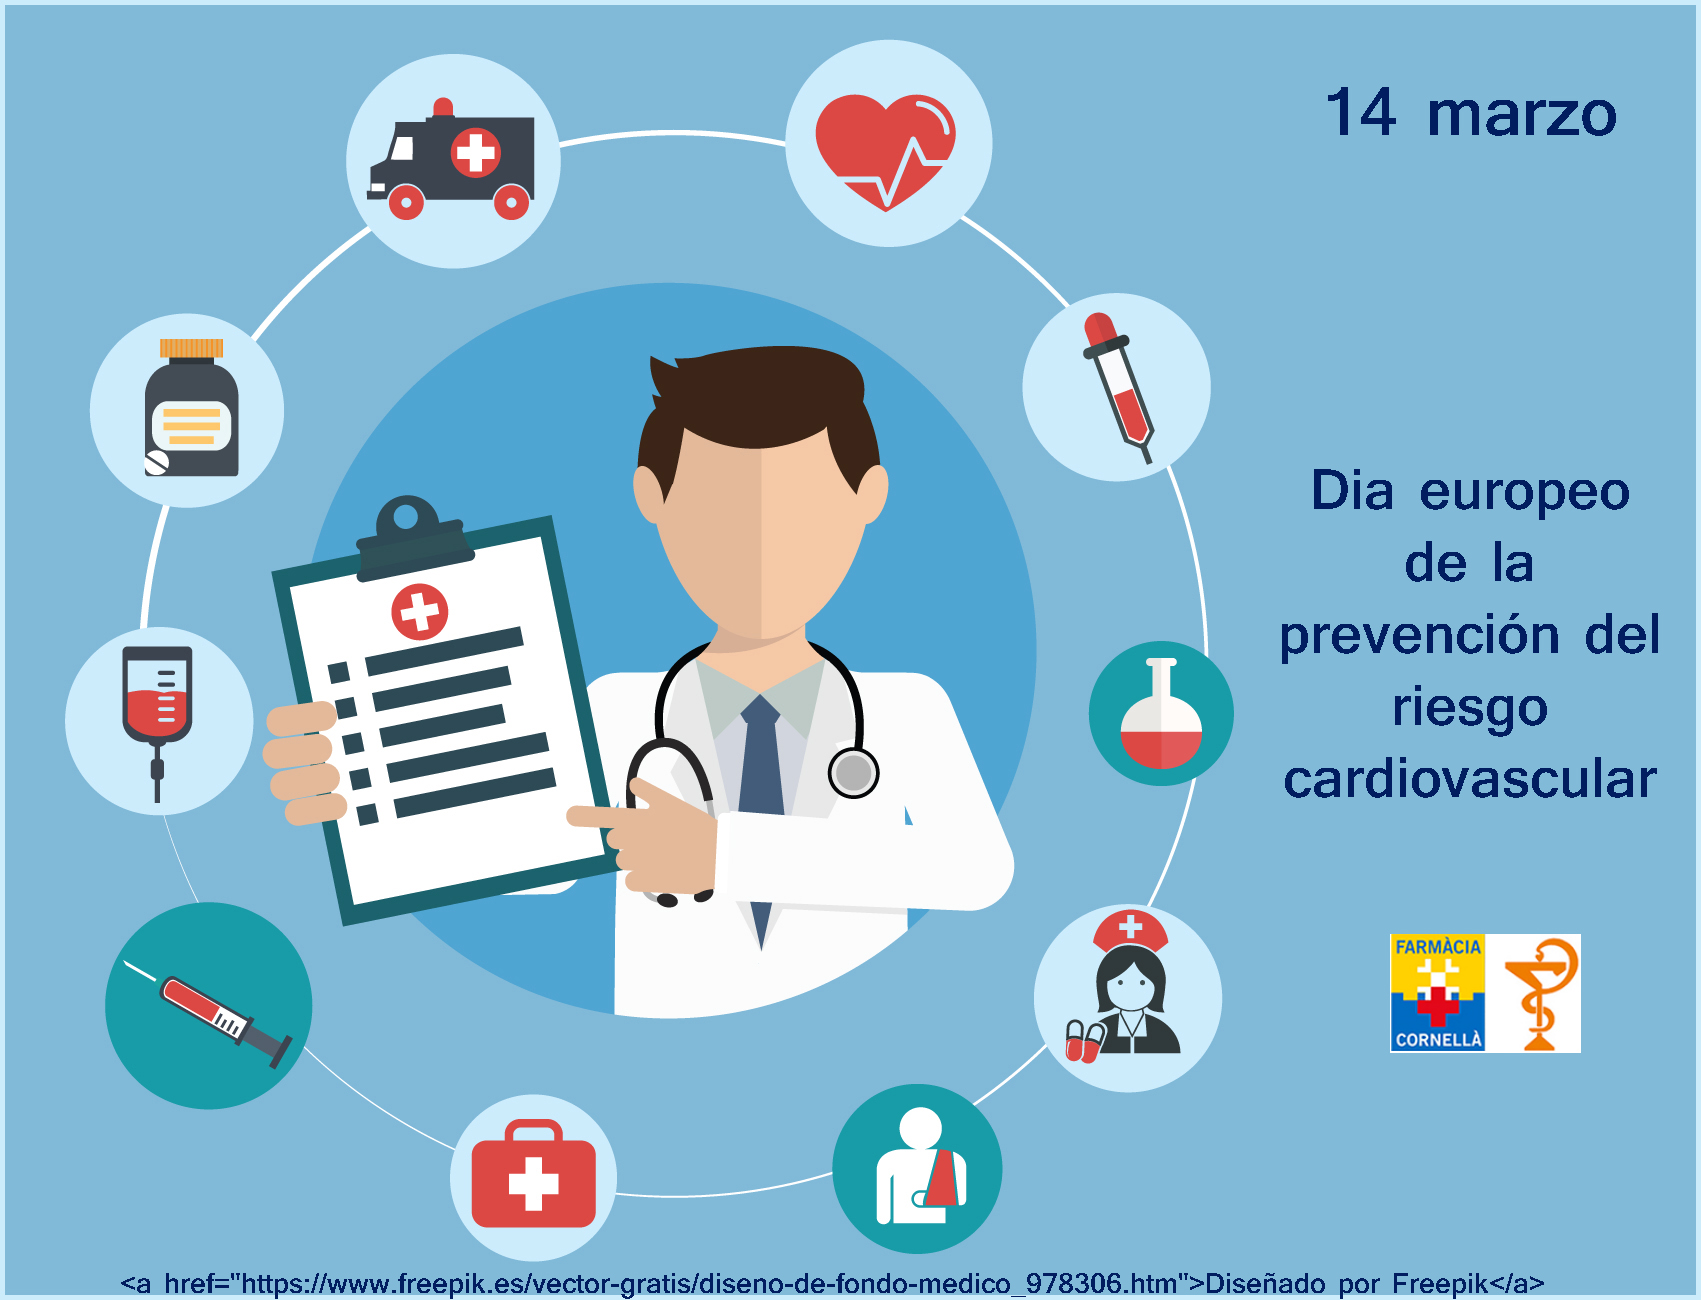 14 De Marzo Dia Europeo De La Prevención Del Riesgo Cardiovascular Farmacia Moreno Murillo